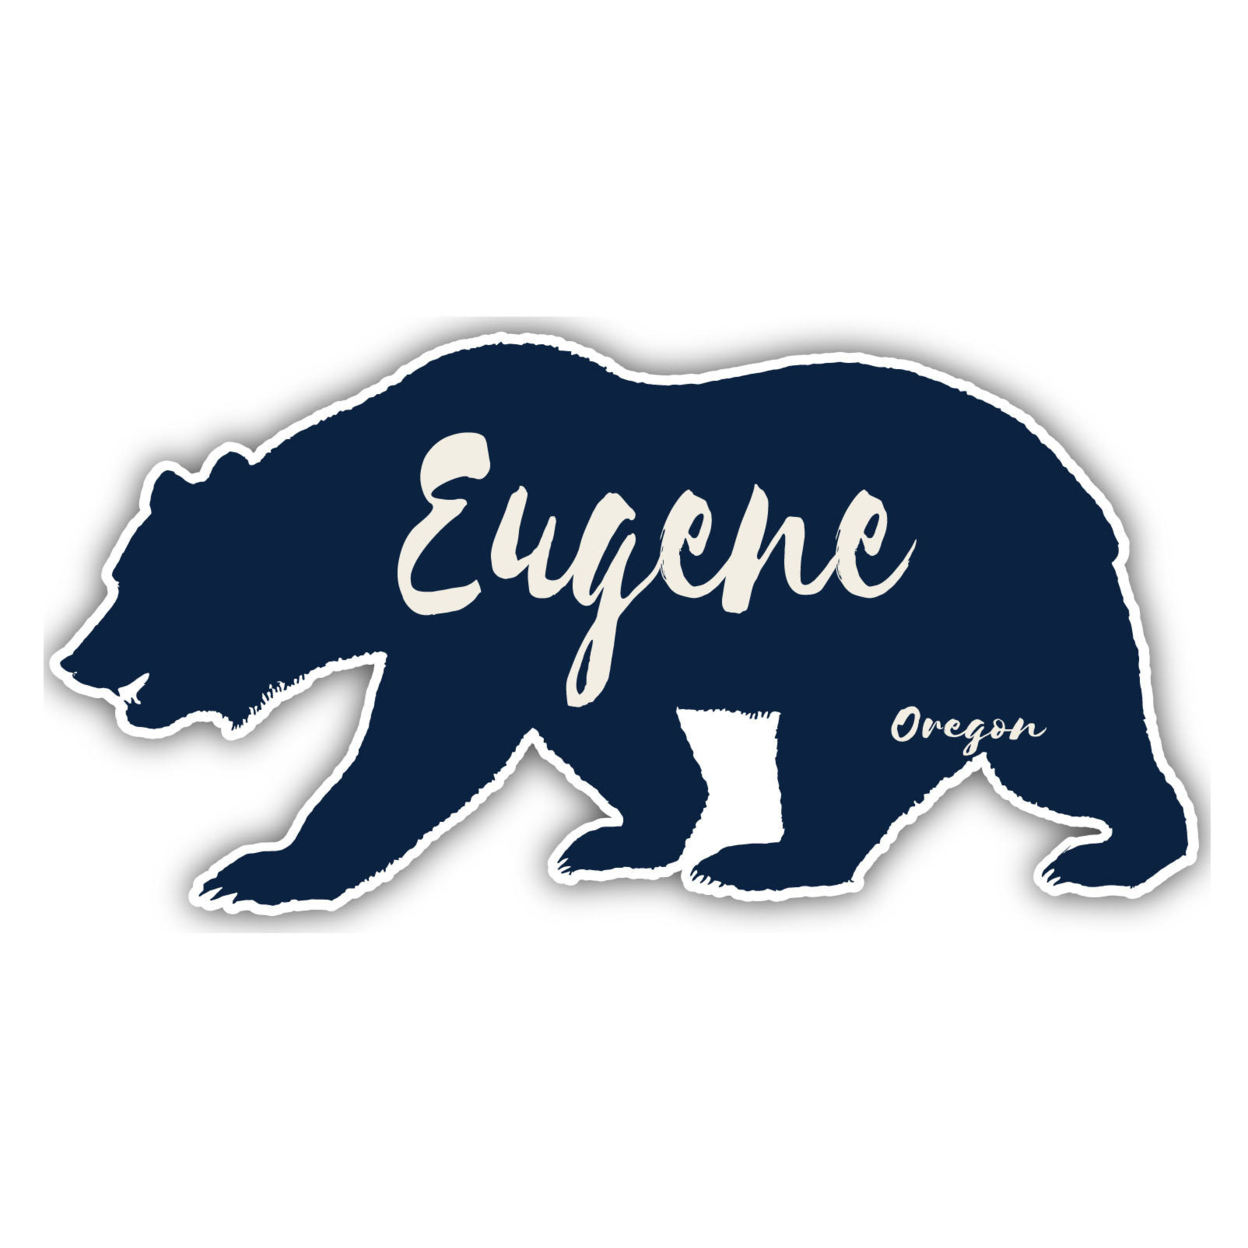 Eugene Oregon Souvenir Decorative Stickers (Choose Theme And Size) - 4-Pack, 12-Inch, Bear